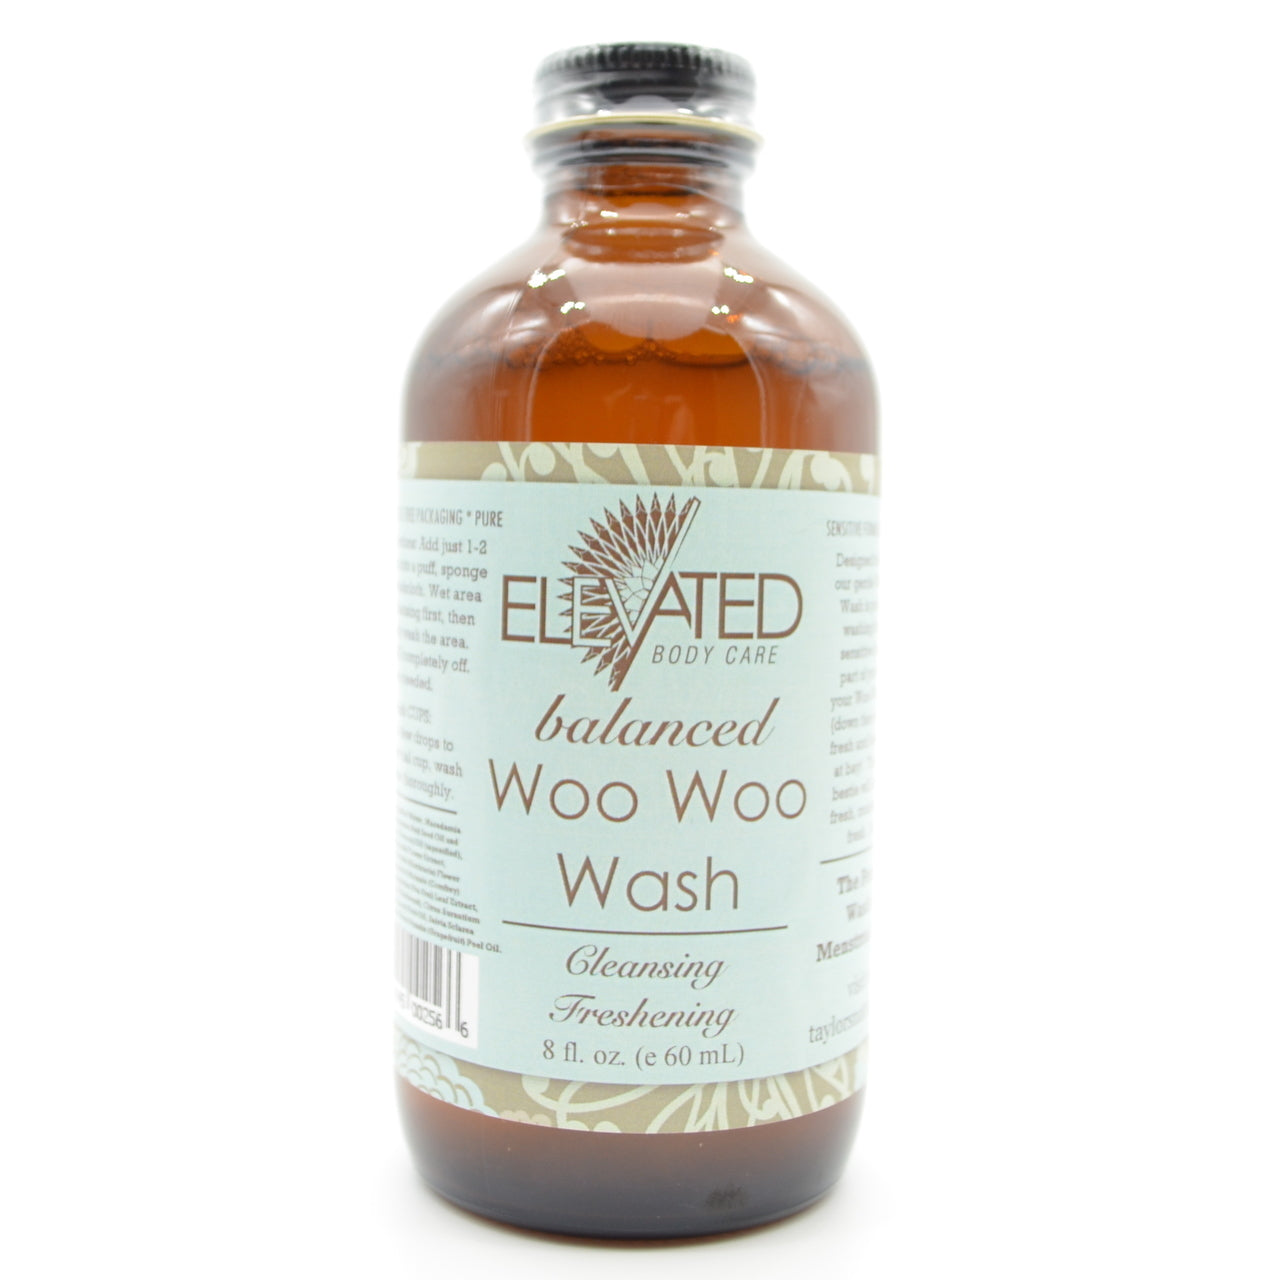 Elevated Body Care - Woo Woo Wash (Balanced) - Natural Feminine Wash